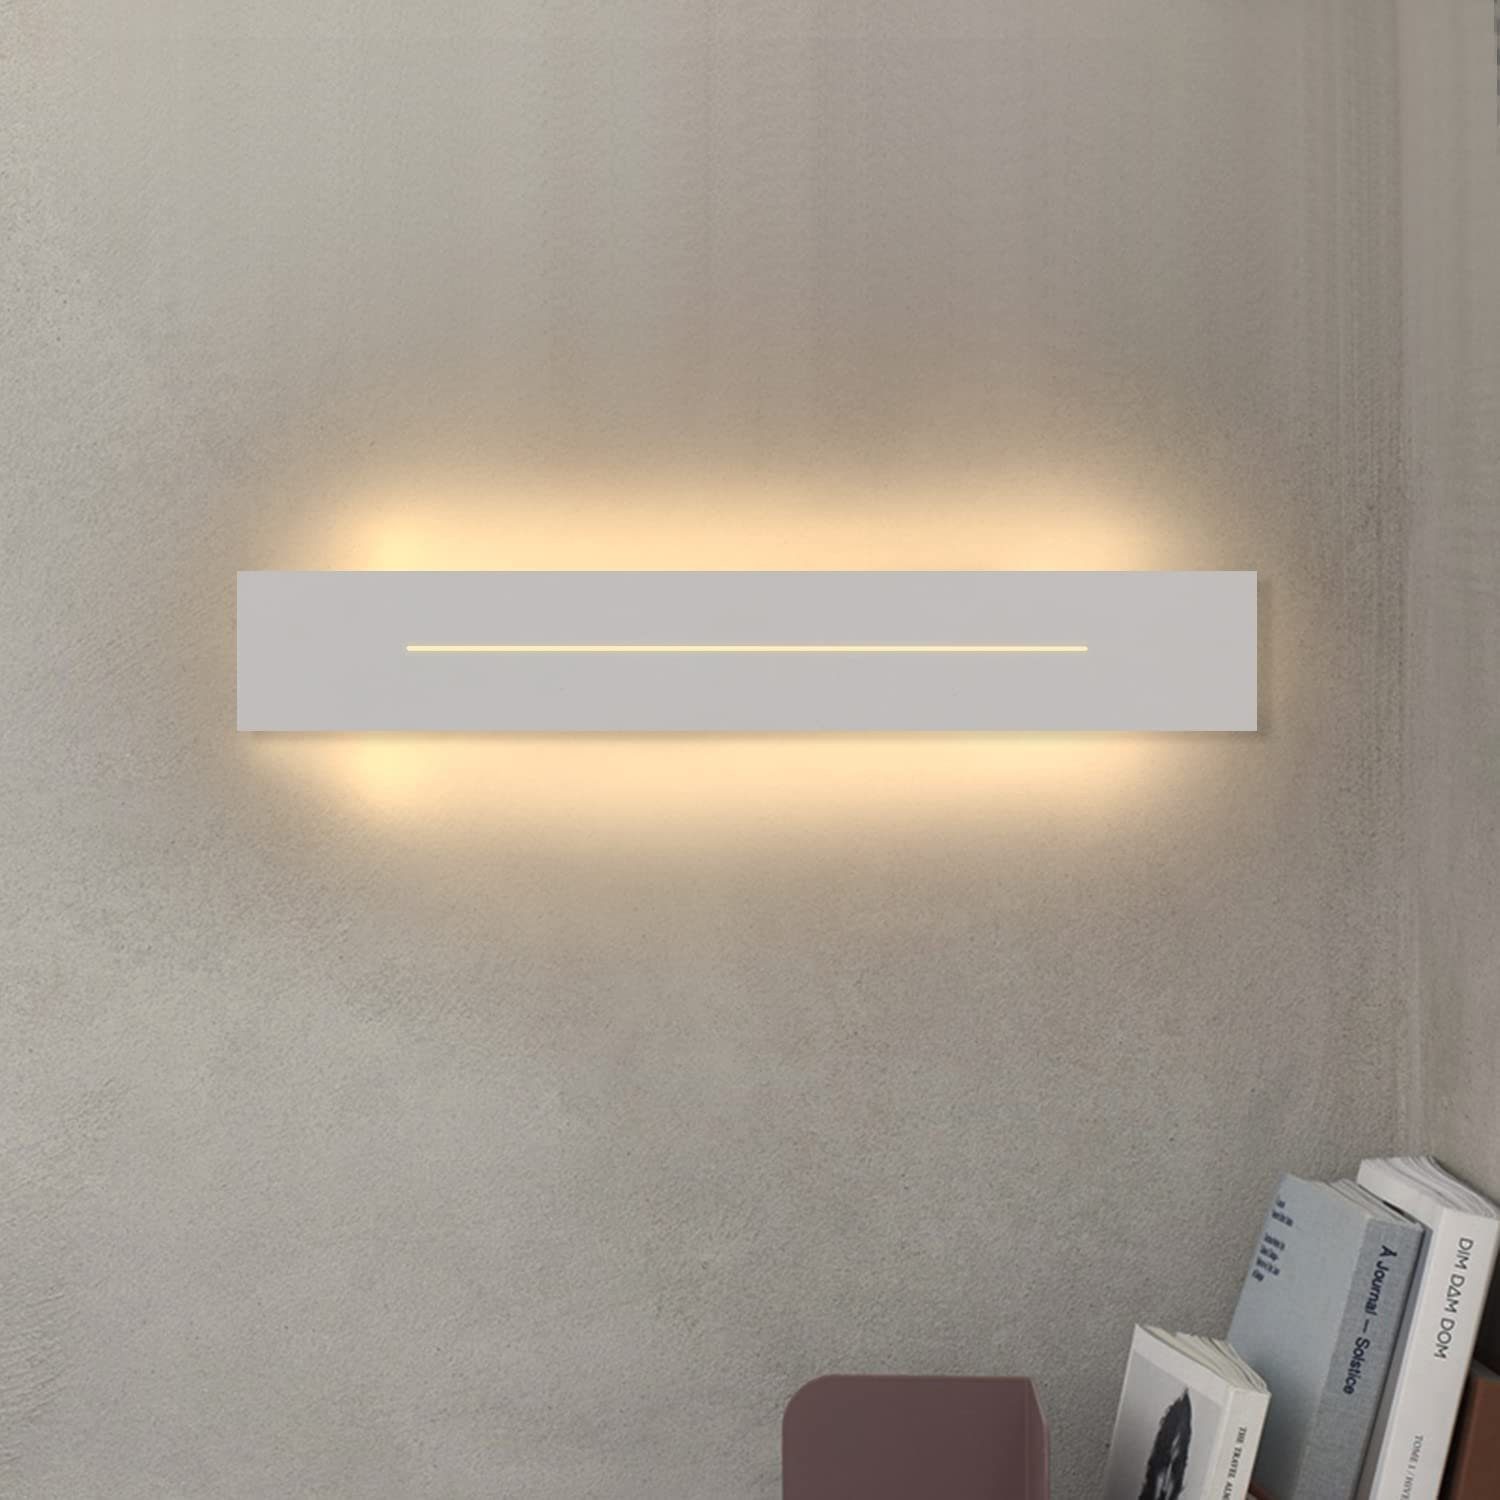 Nettlife LED Wandleuchte innen 30CM Modern Wandlampe Warmweiss Weiß 8W Wandbeleuchtung, LED fest integriert, Warmweiß, für Treppenhaus Schlafzimmer Flur Wohnzimmer Kinderzimmer